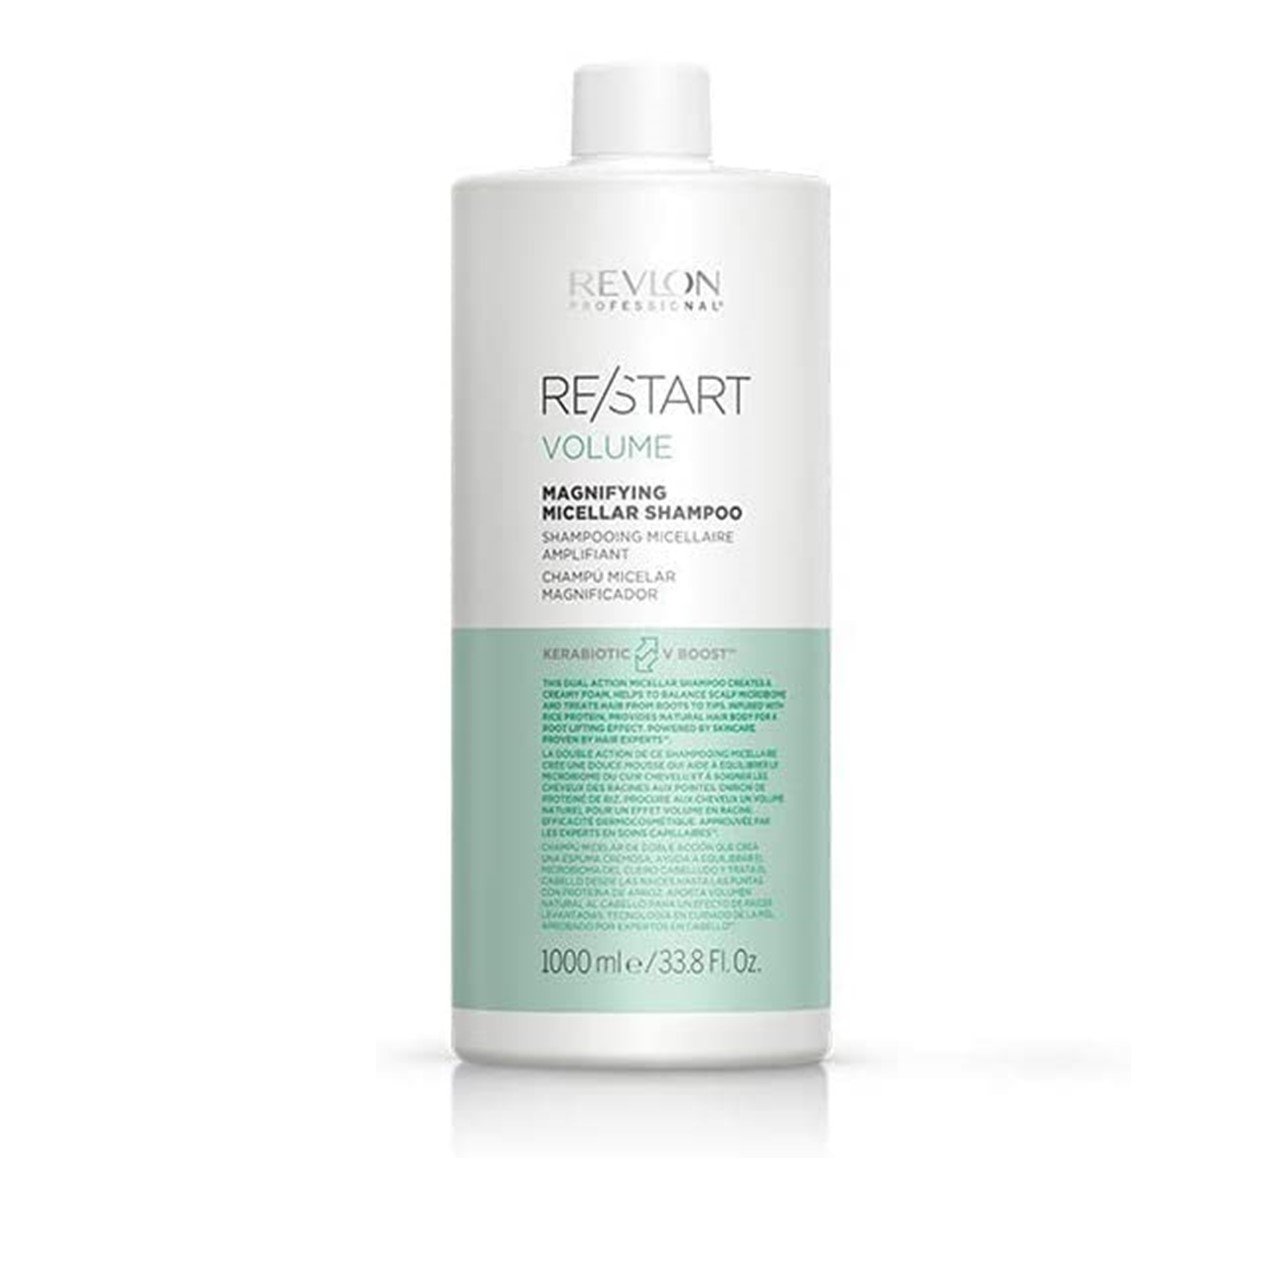 Revlon Professional Re/Start Volume Magnifying Micellar Shampoo 1L (33.81fl oz)